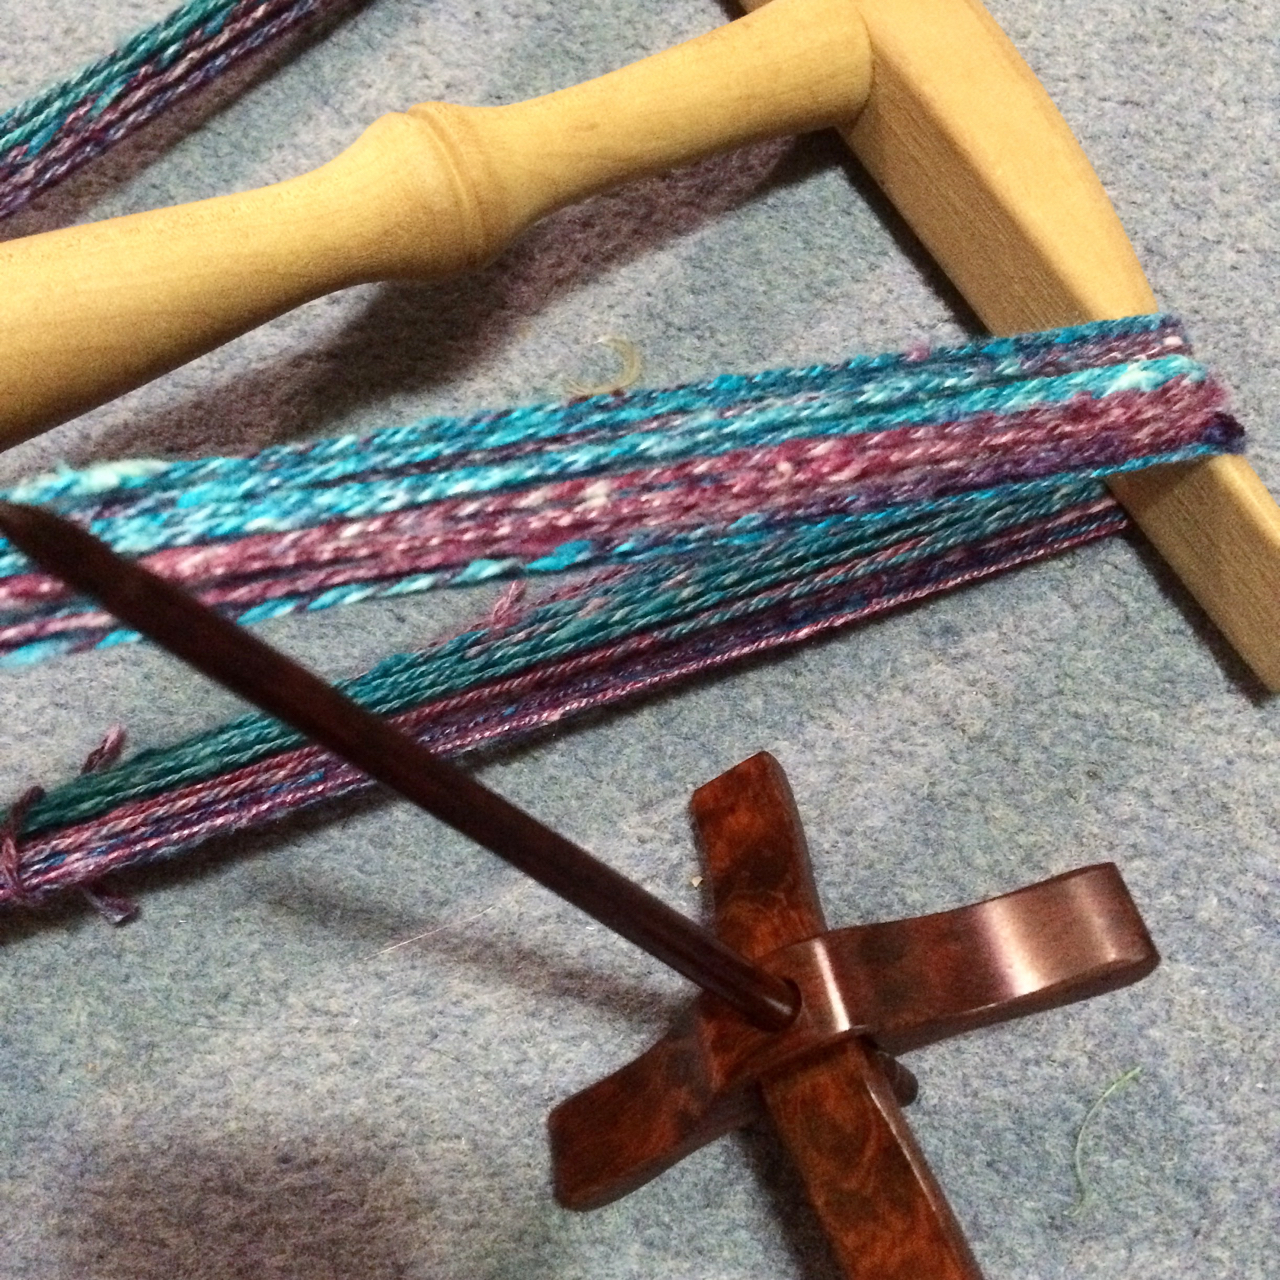 Stitchin' Bints: Spindle spinning silk hankies / mawatas